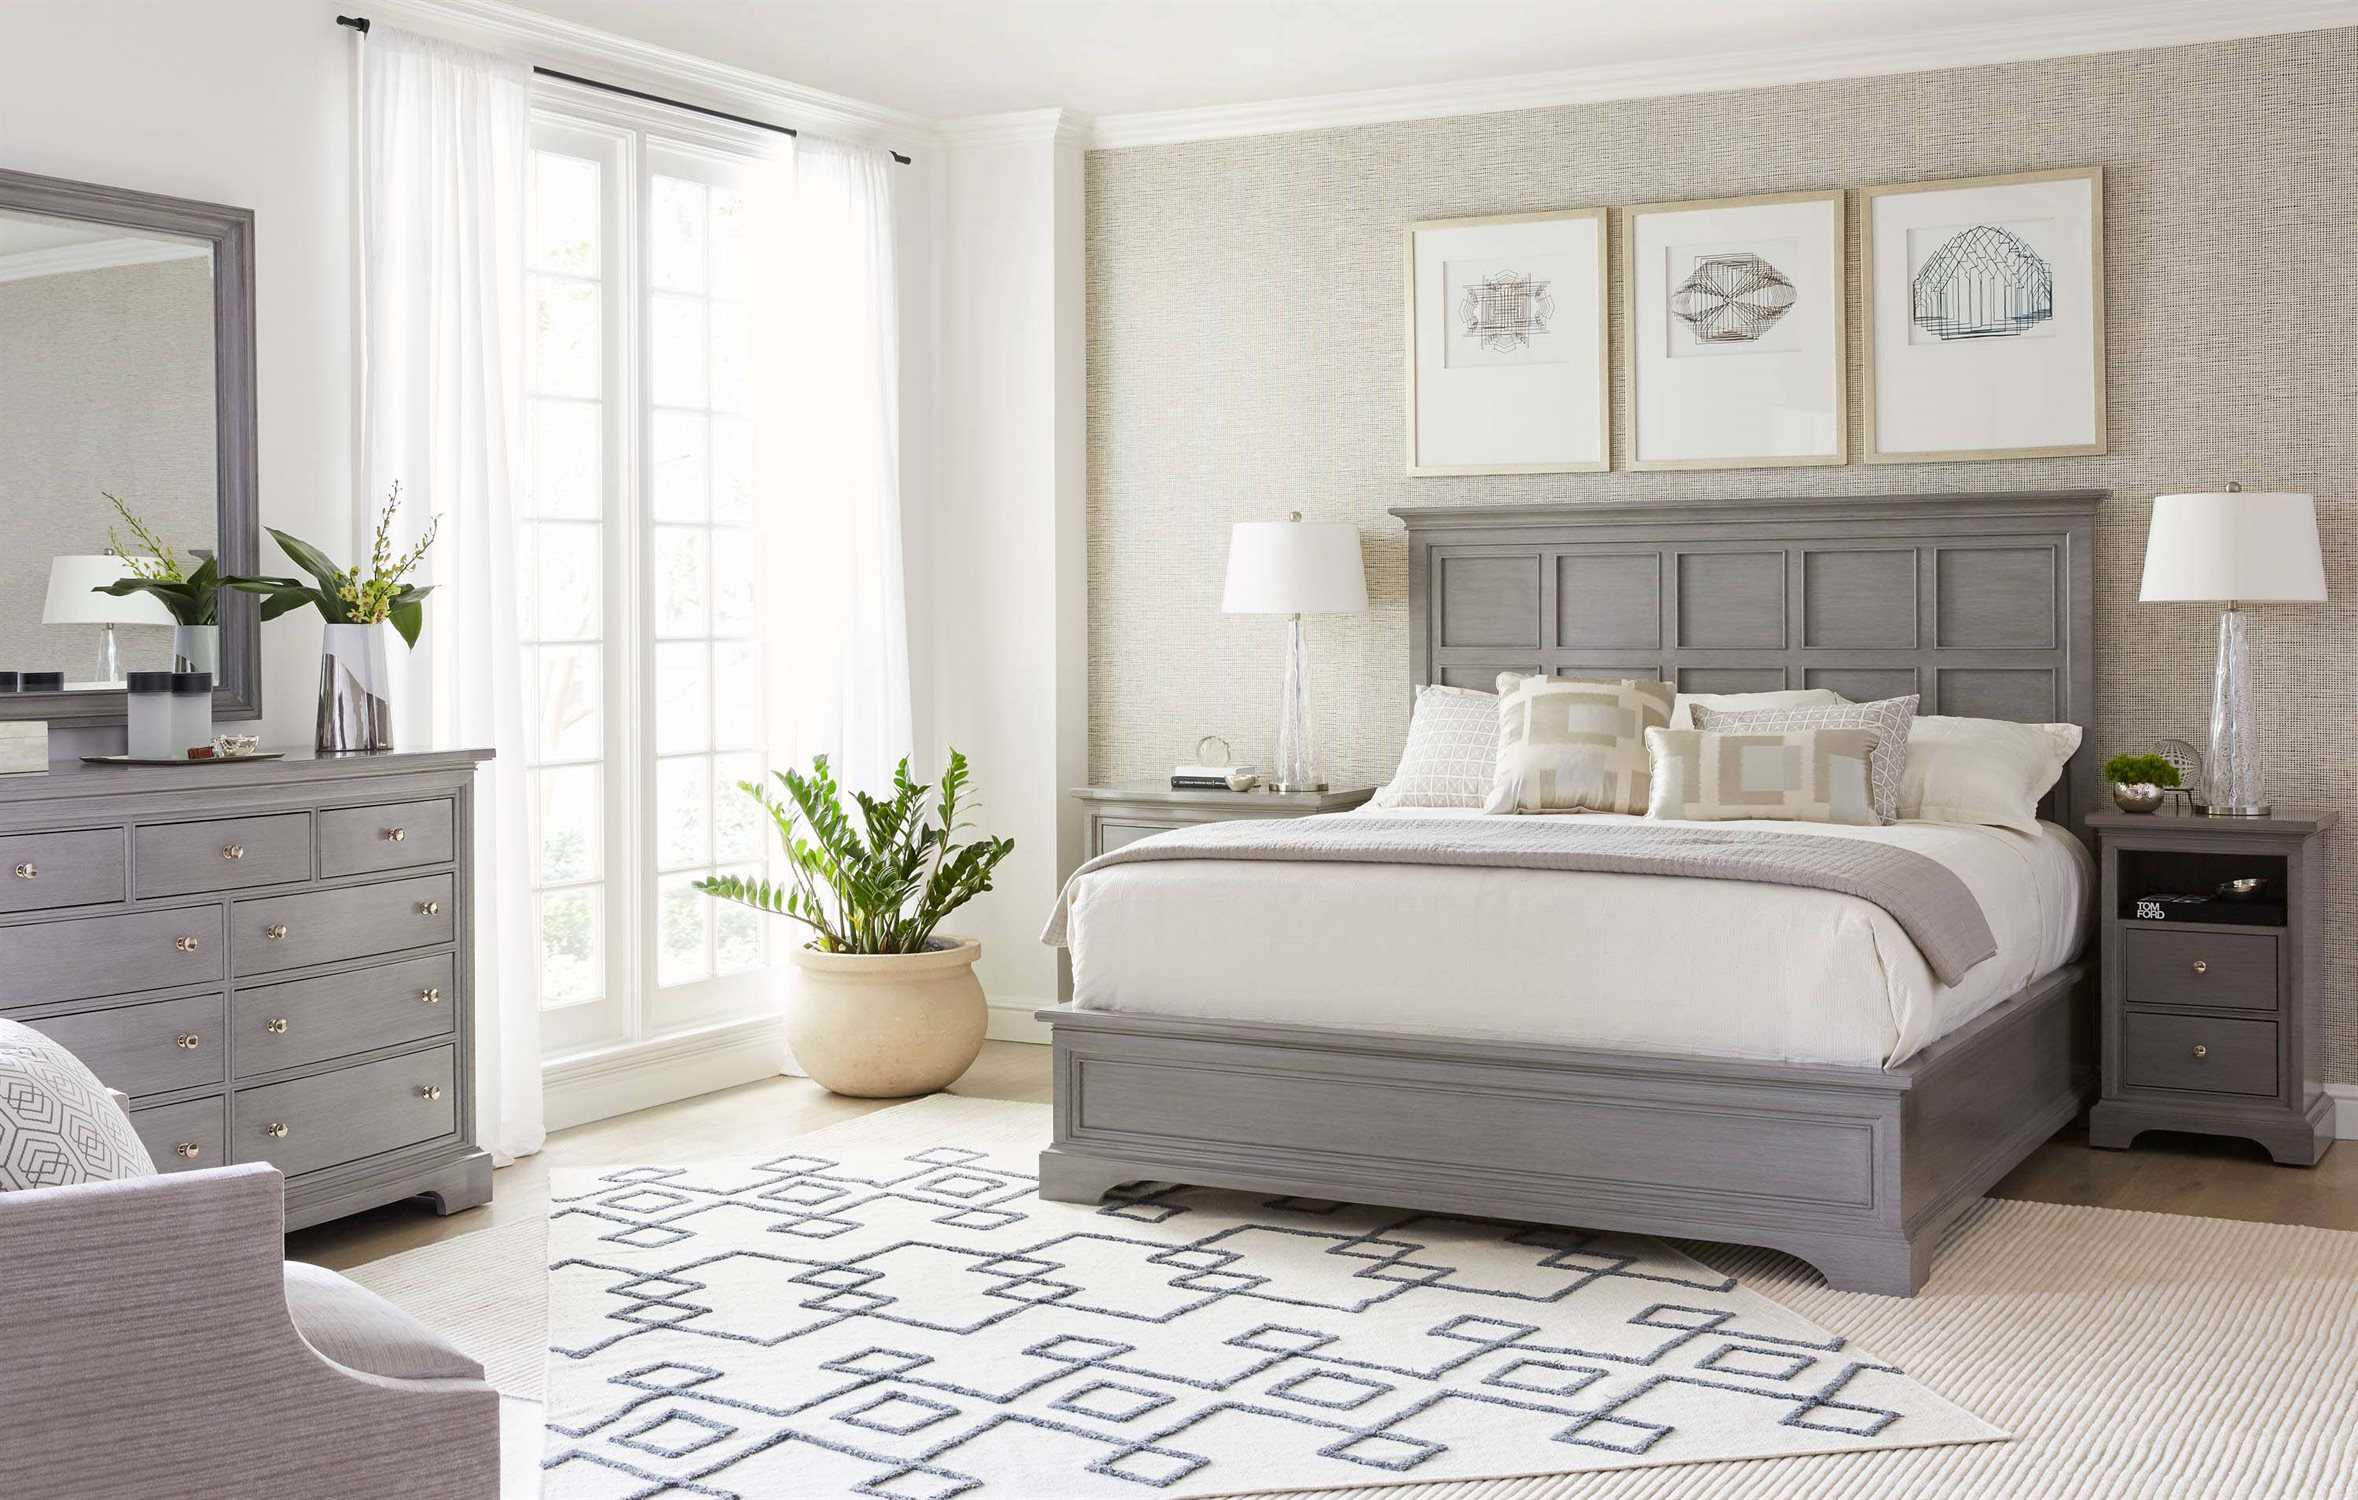 Stanley Furniture Transitional Bedroom Set intended for size 2358 X 1500